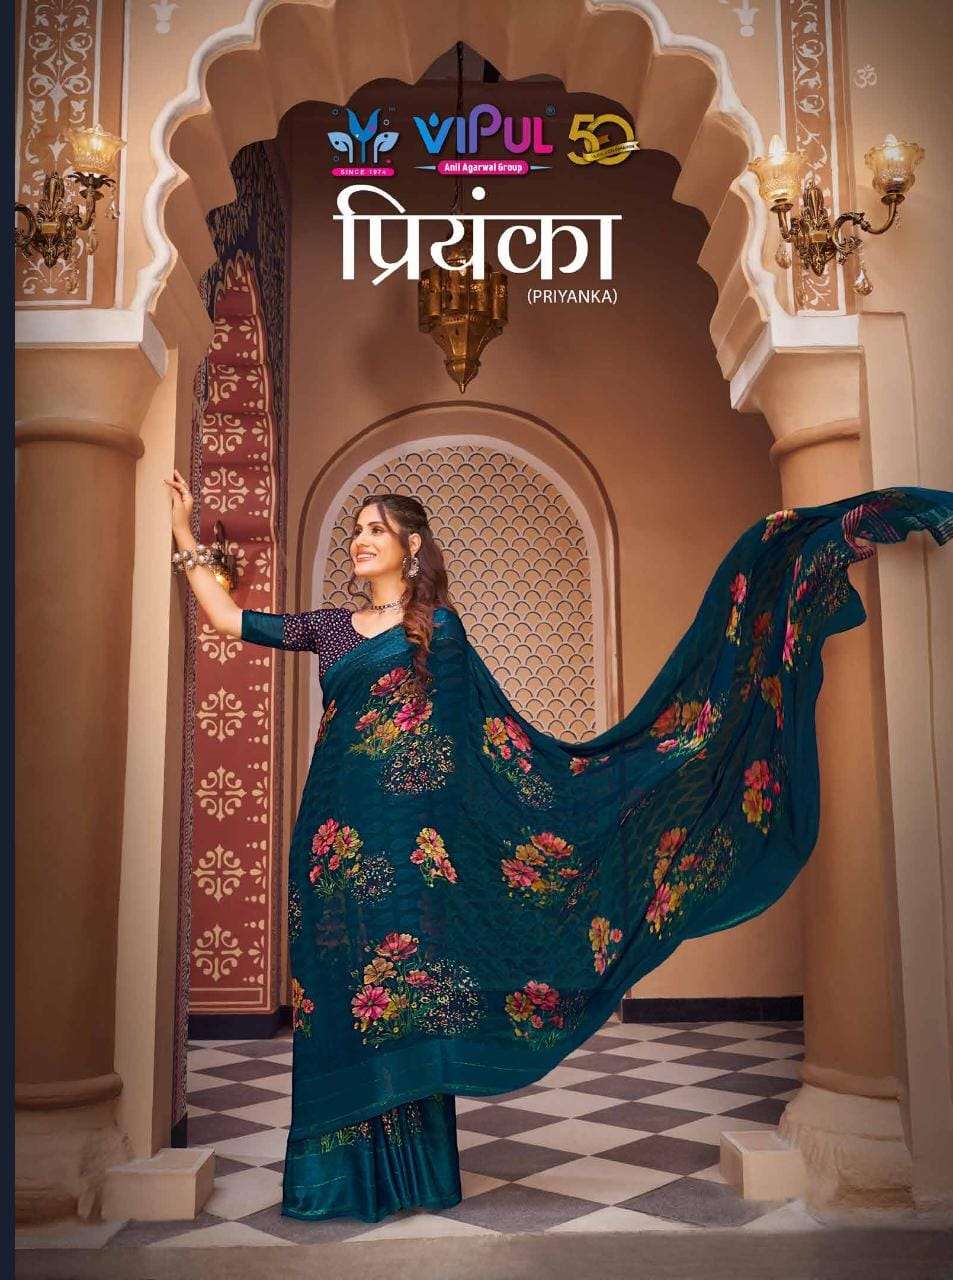 vipul fashion priyanka 70009-70020 series beautiful brasso sarees collection 